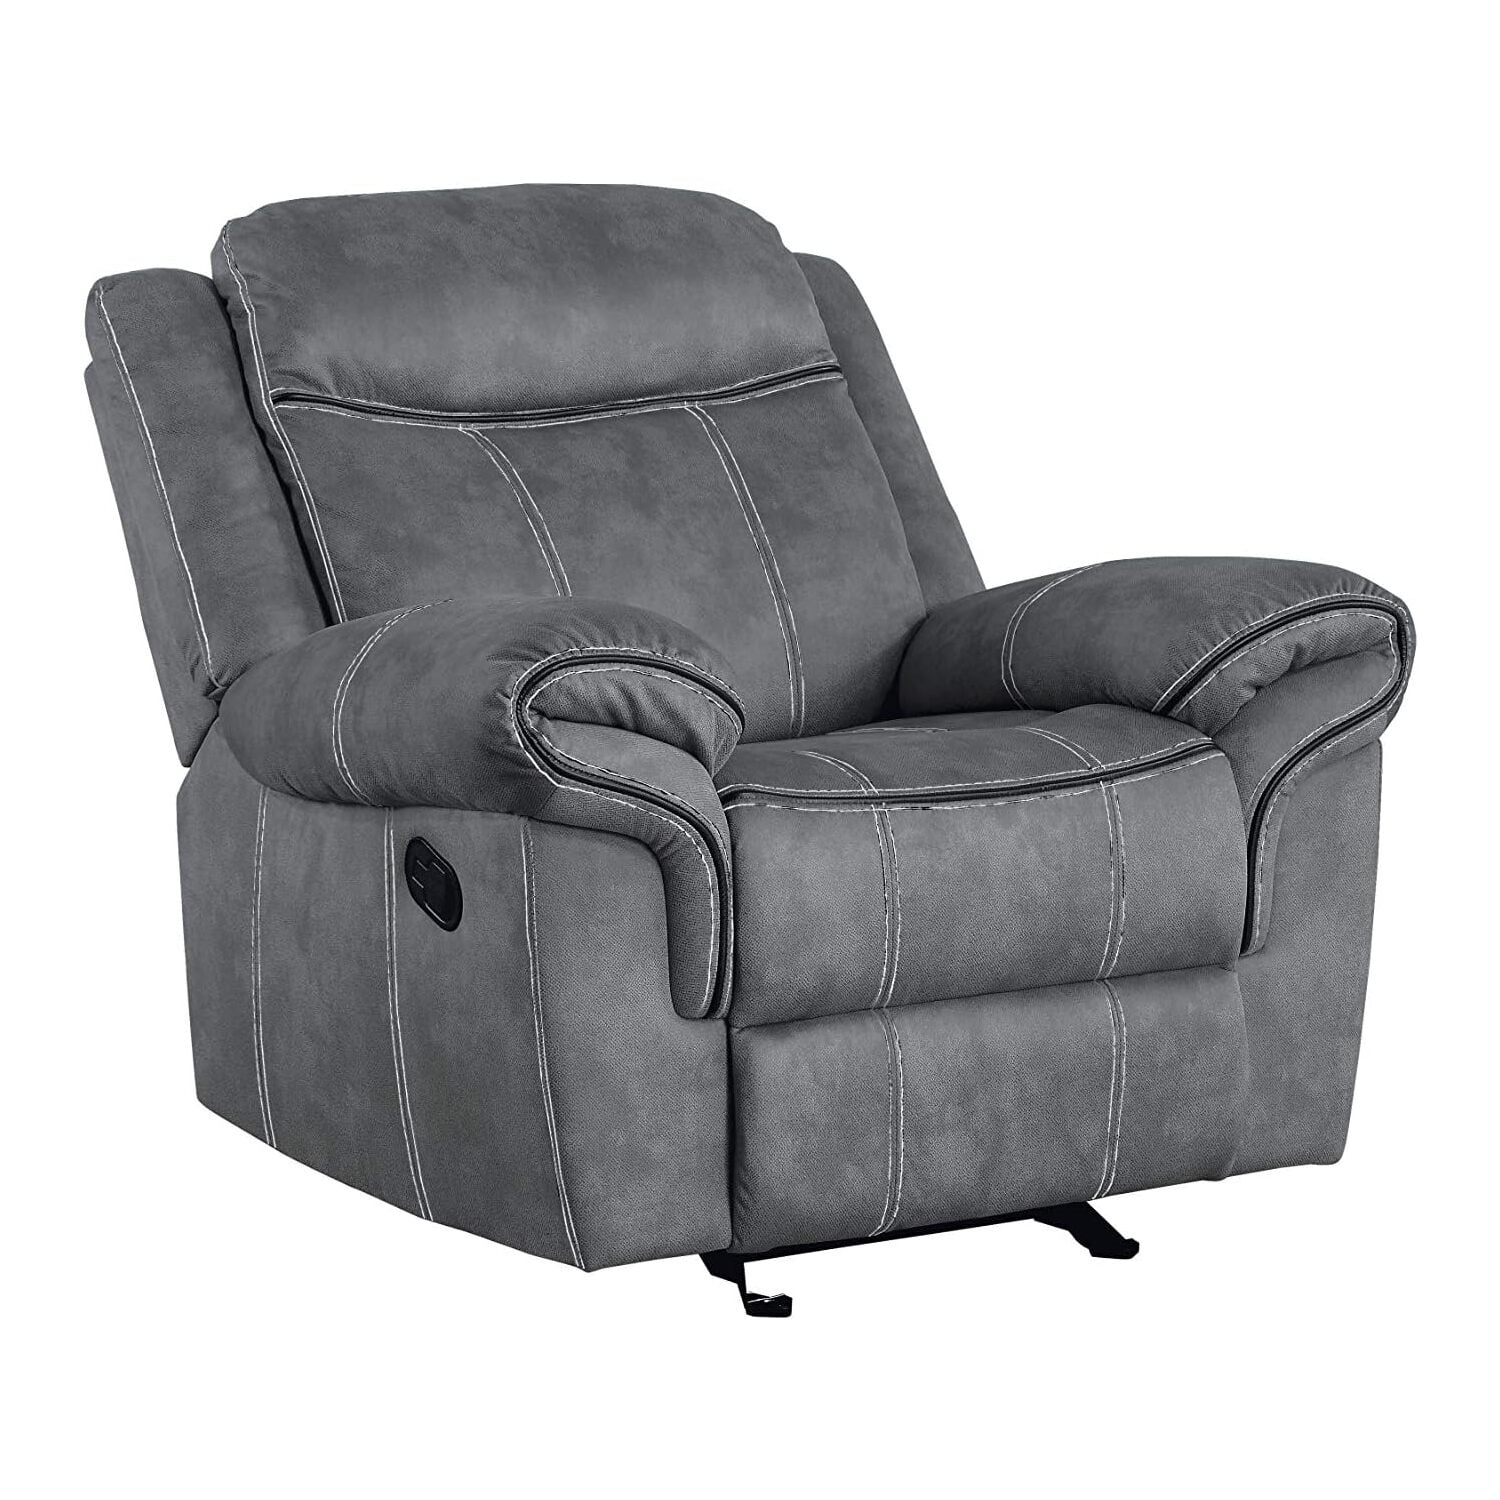 Picture of Acme Furniture 55027 Zubaida Glider Recliner, Gray Velvet